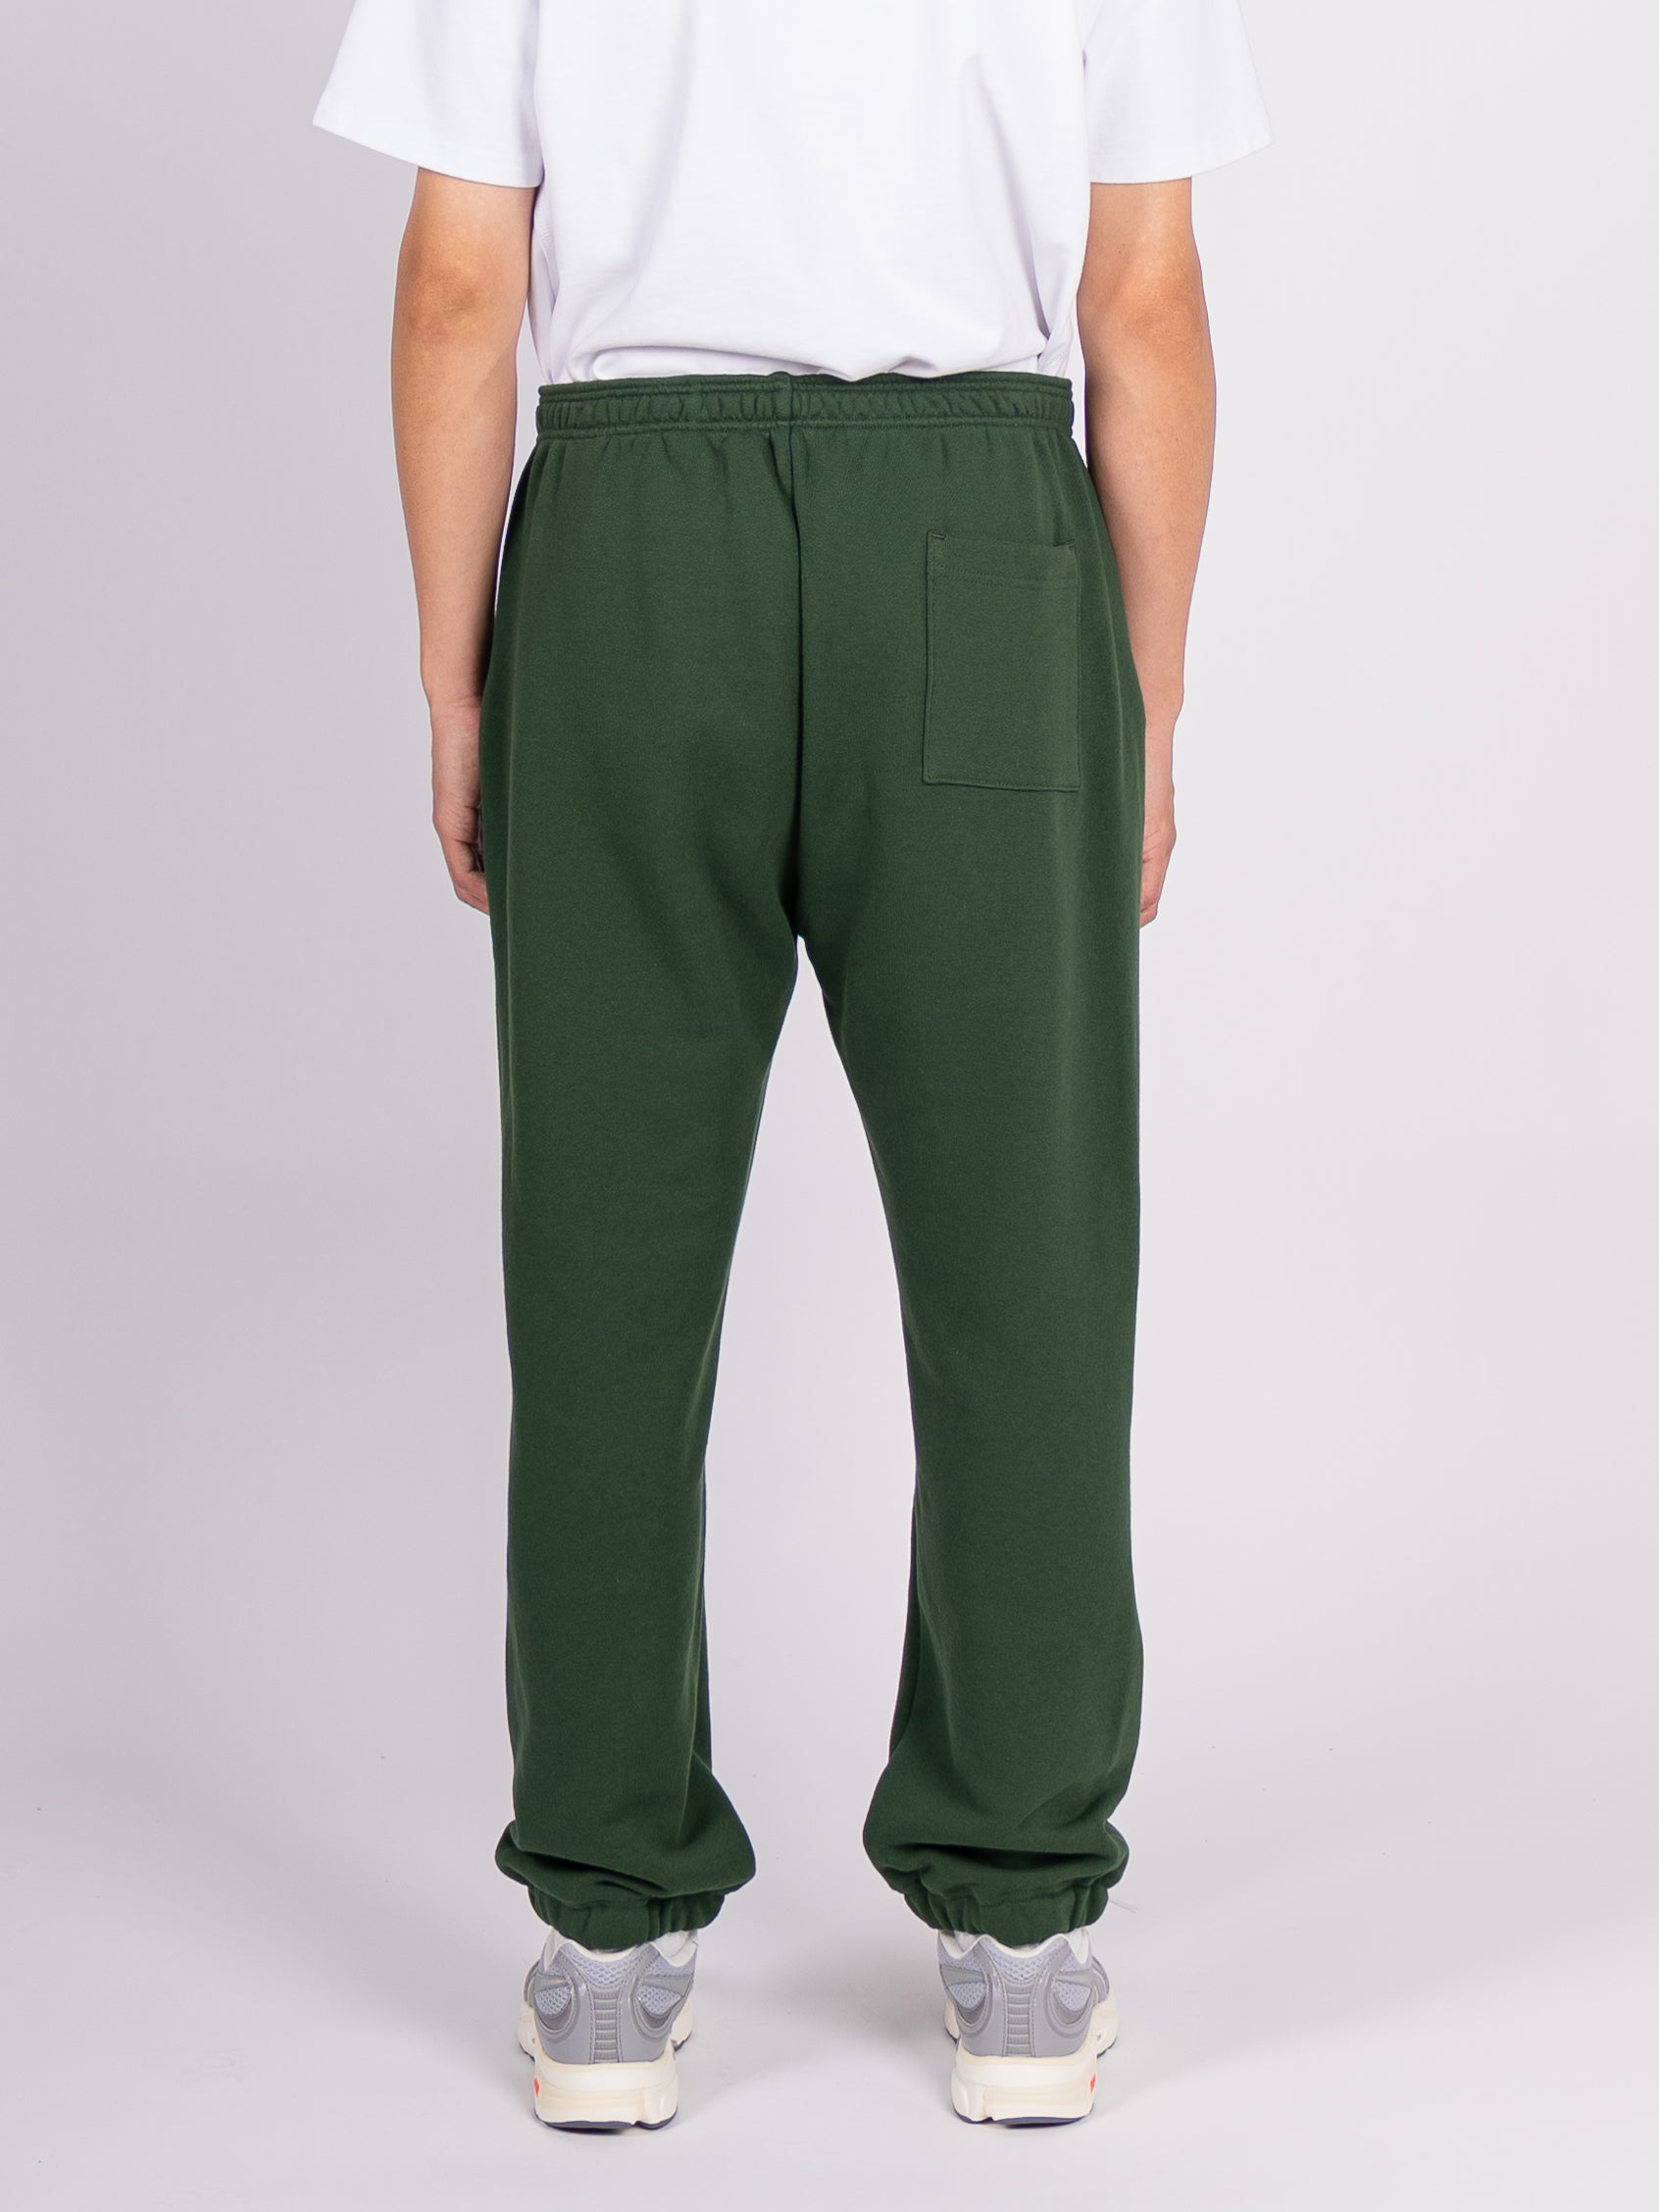 VIBTEX for FreshService Sweat Pants (Green)